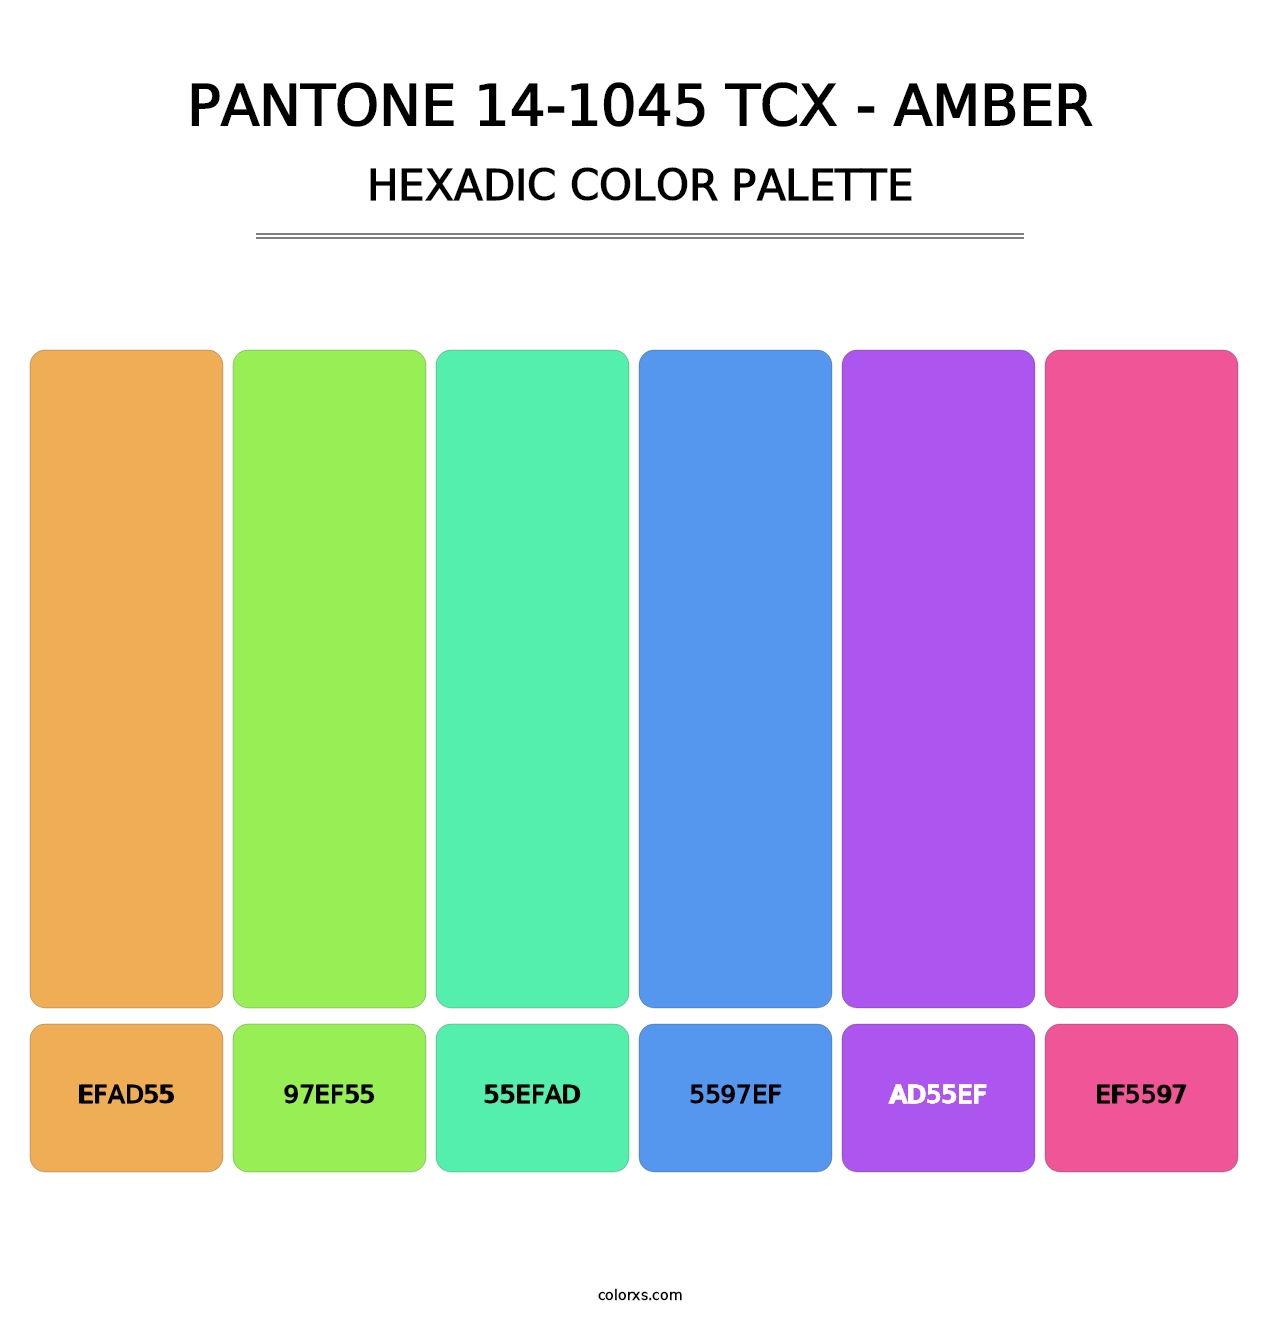 PANTONE 14-1045 TCX - Amber - Hexadic Color Palette